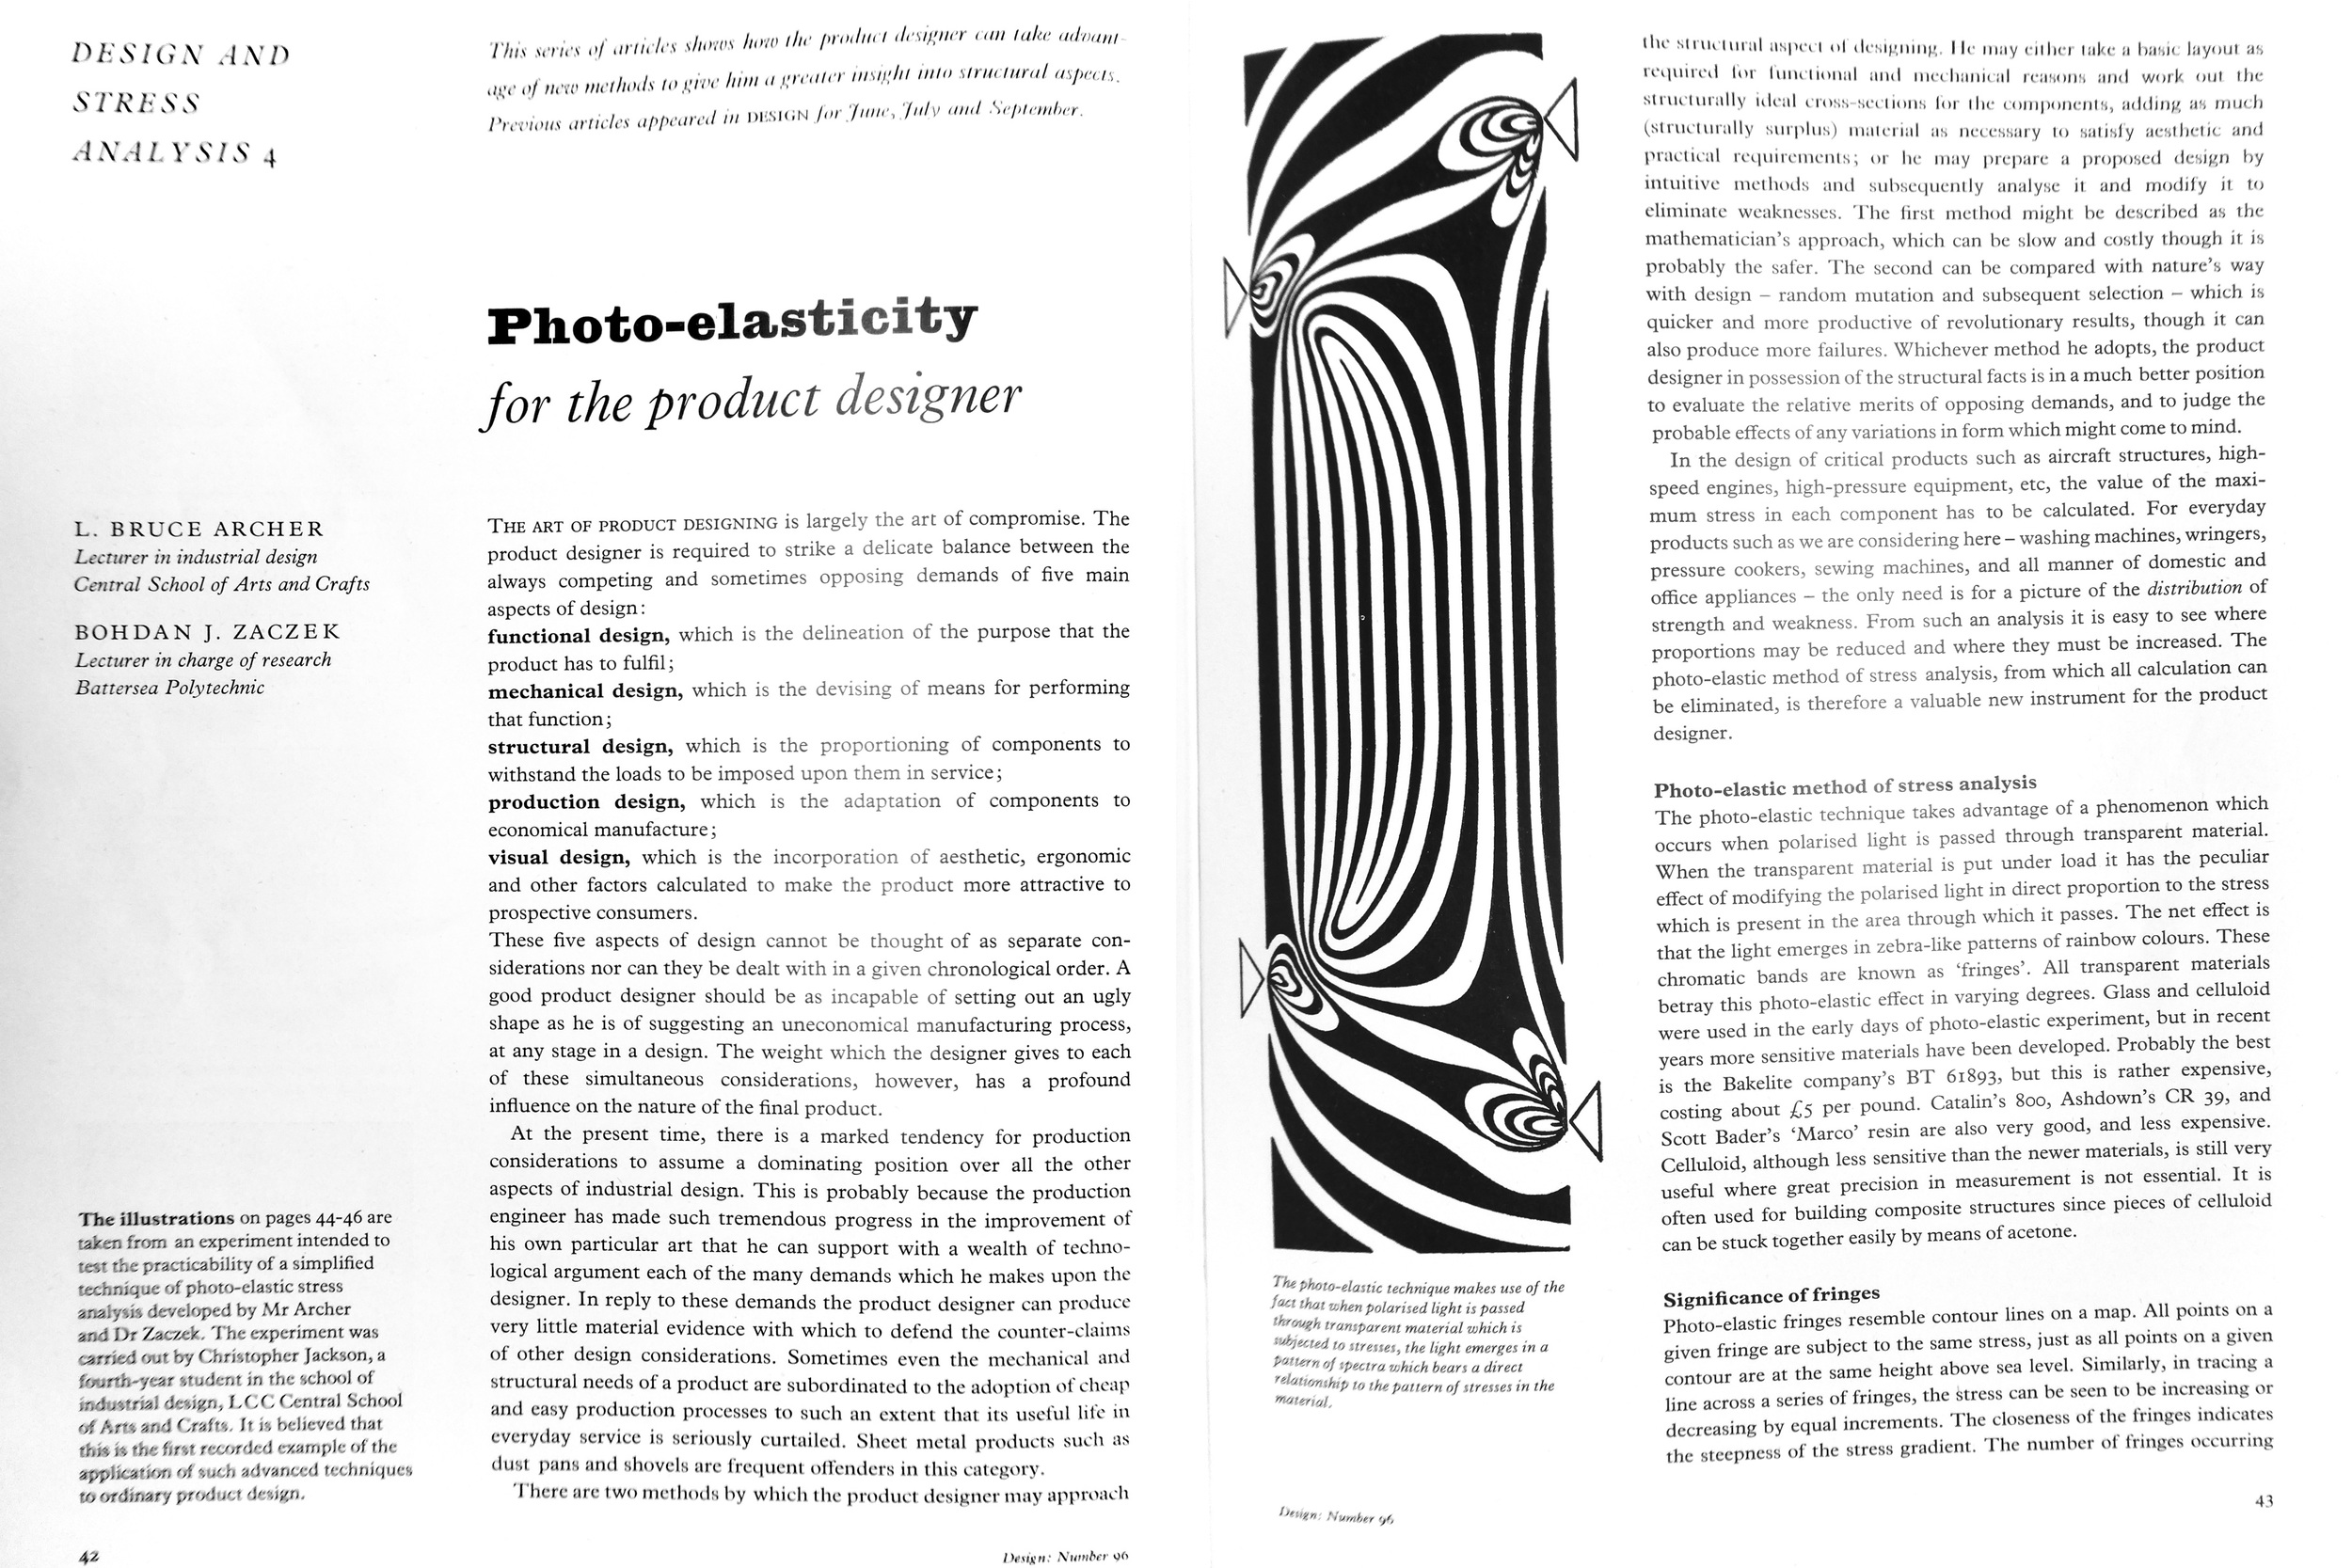 DDR_Photo-elasticity-for-the-Product-Designer_Sept_1956.jpg